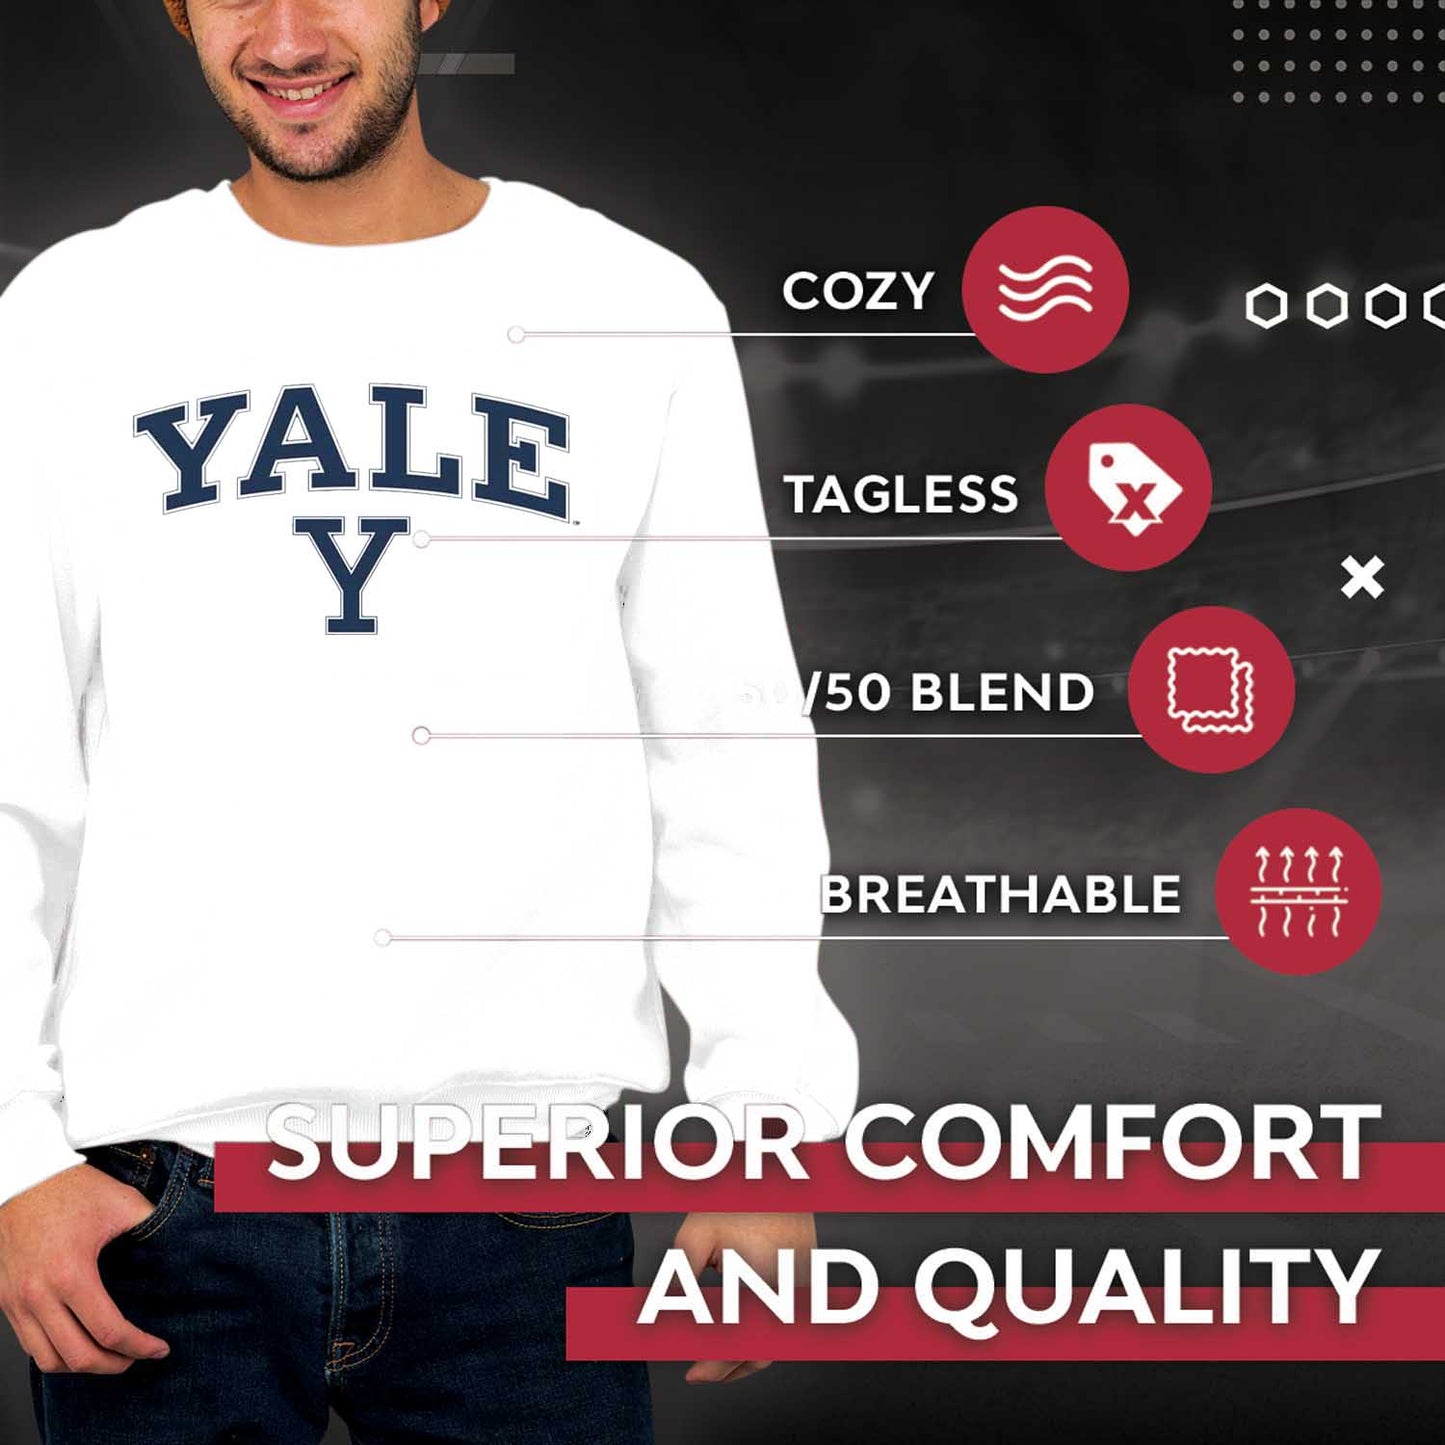 Yale Bulldogs Adult Arch & Logo Soft Style Gameday Crewneck Sweatshirt - White